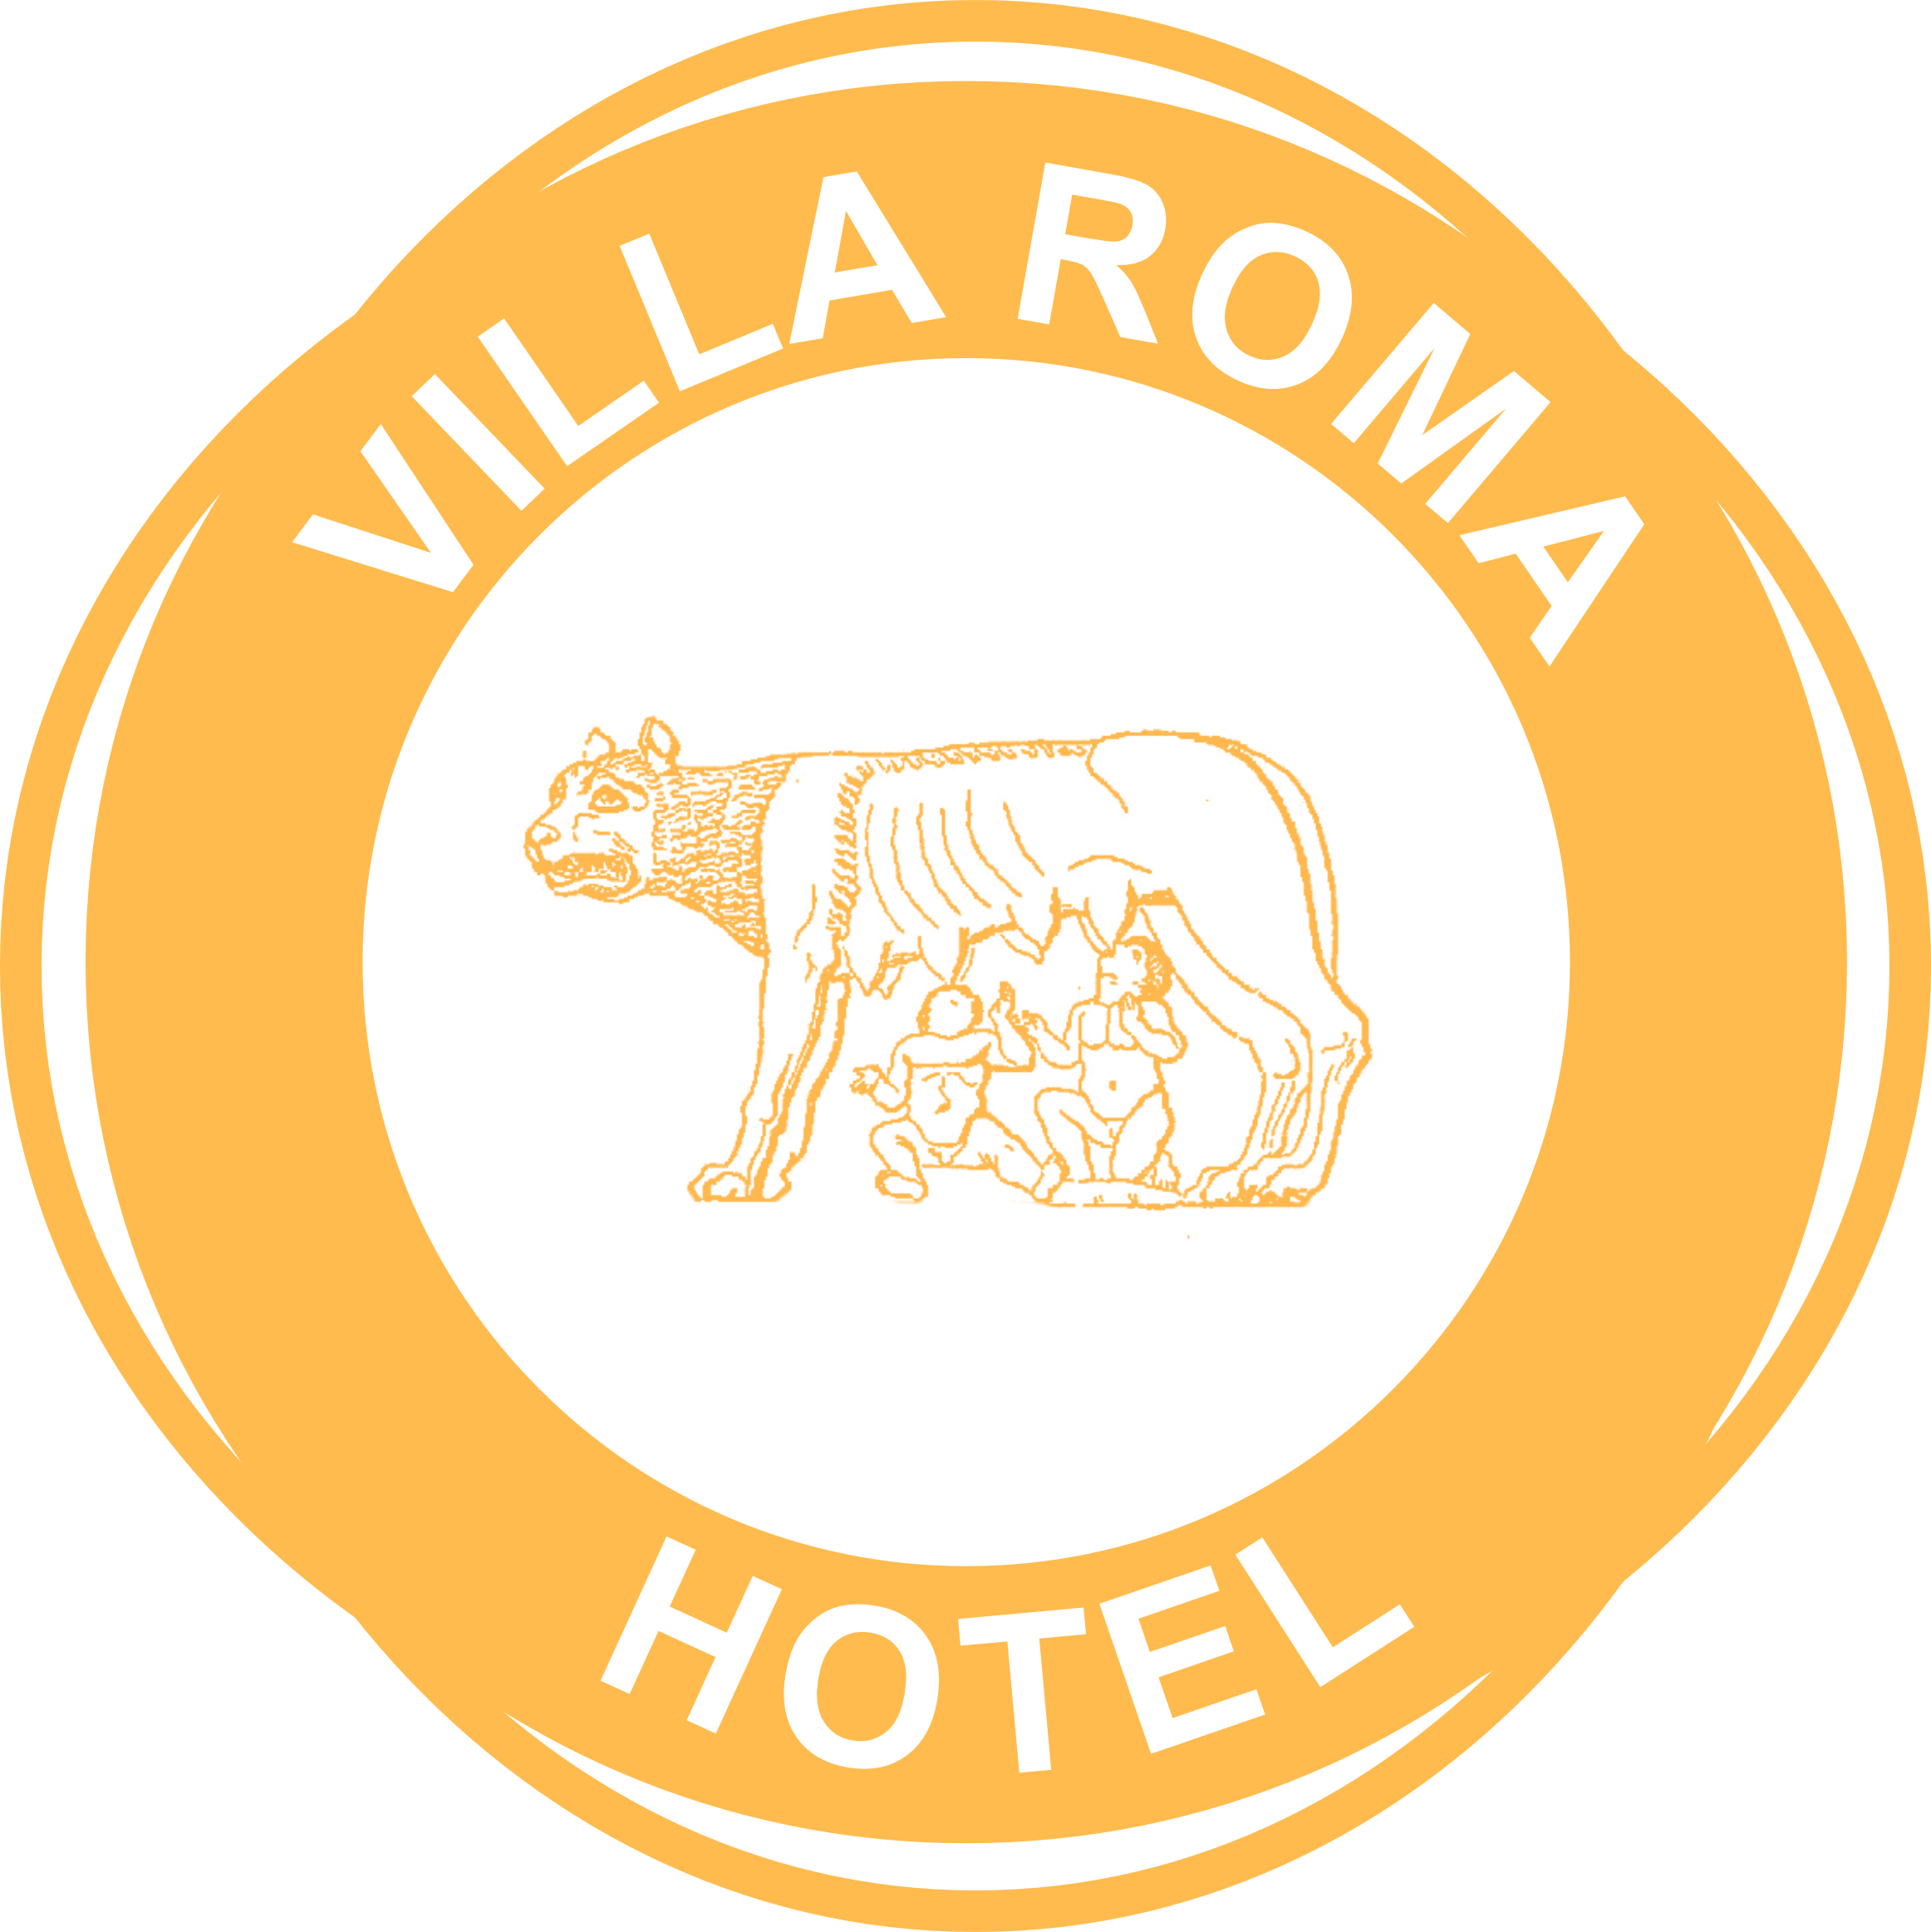 Hotel Villa Roma